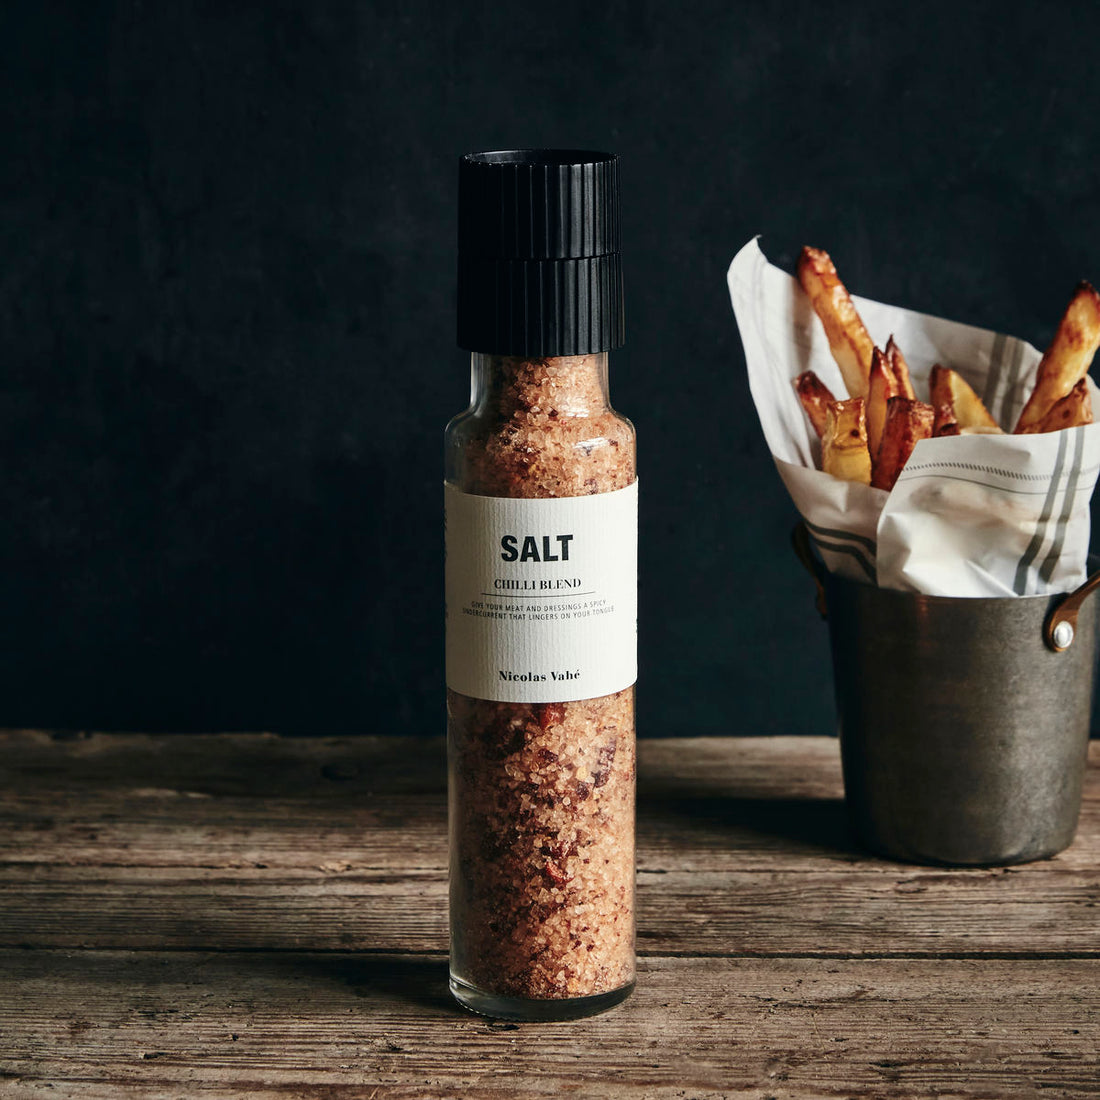 Nikolas Vahé - Salt, Chilli blend